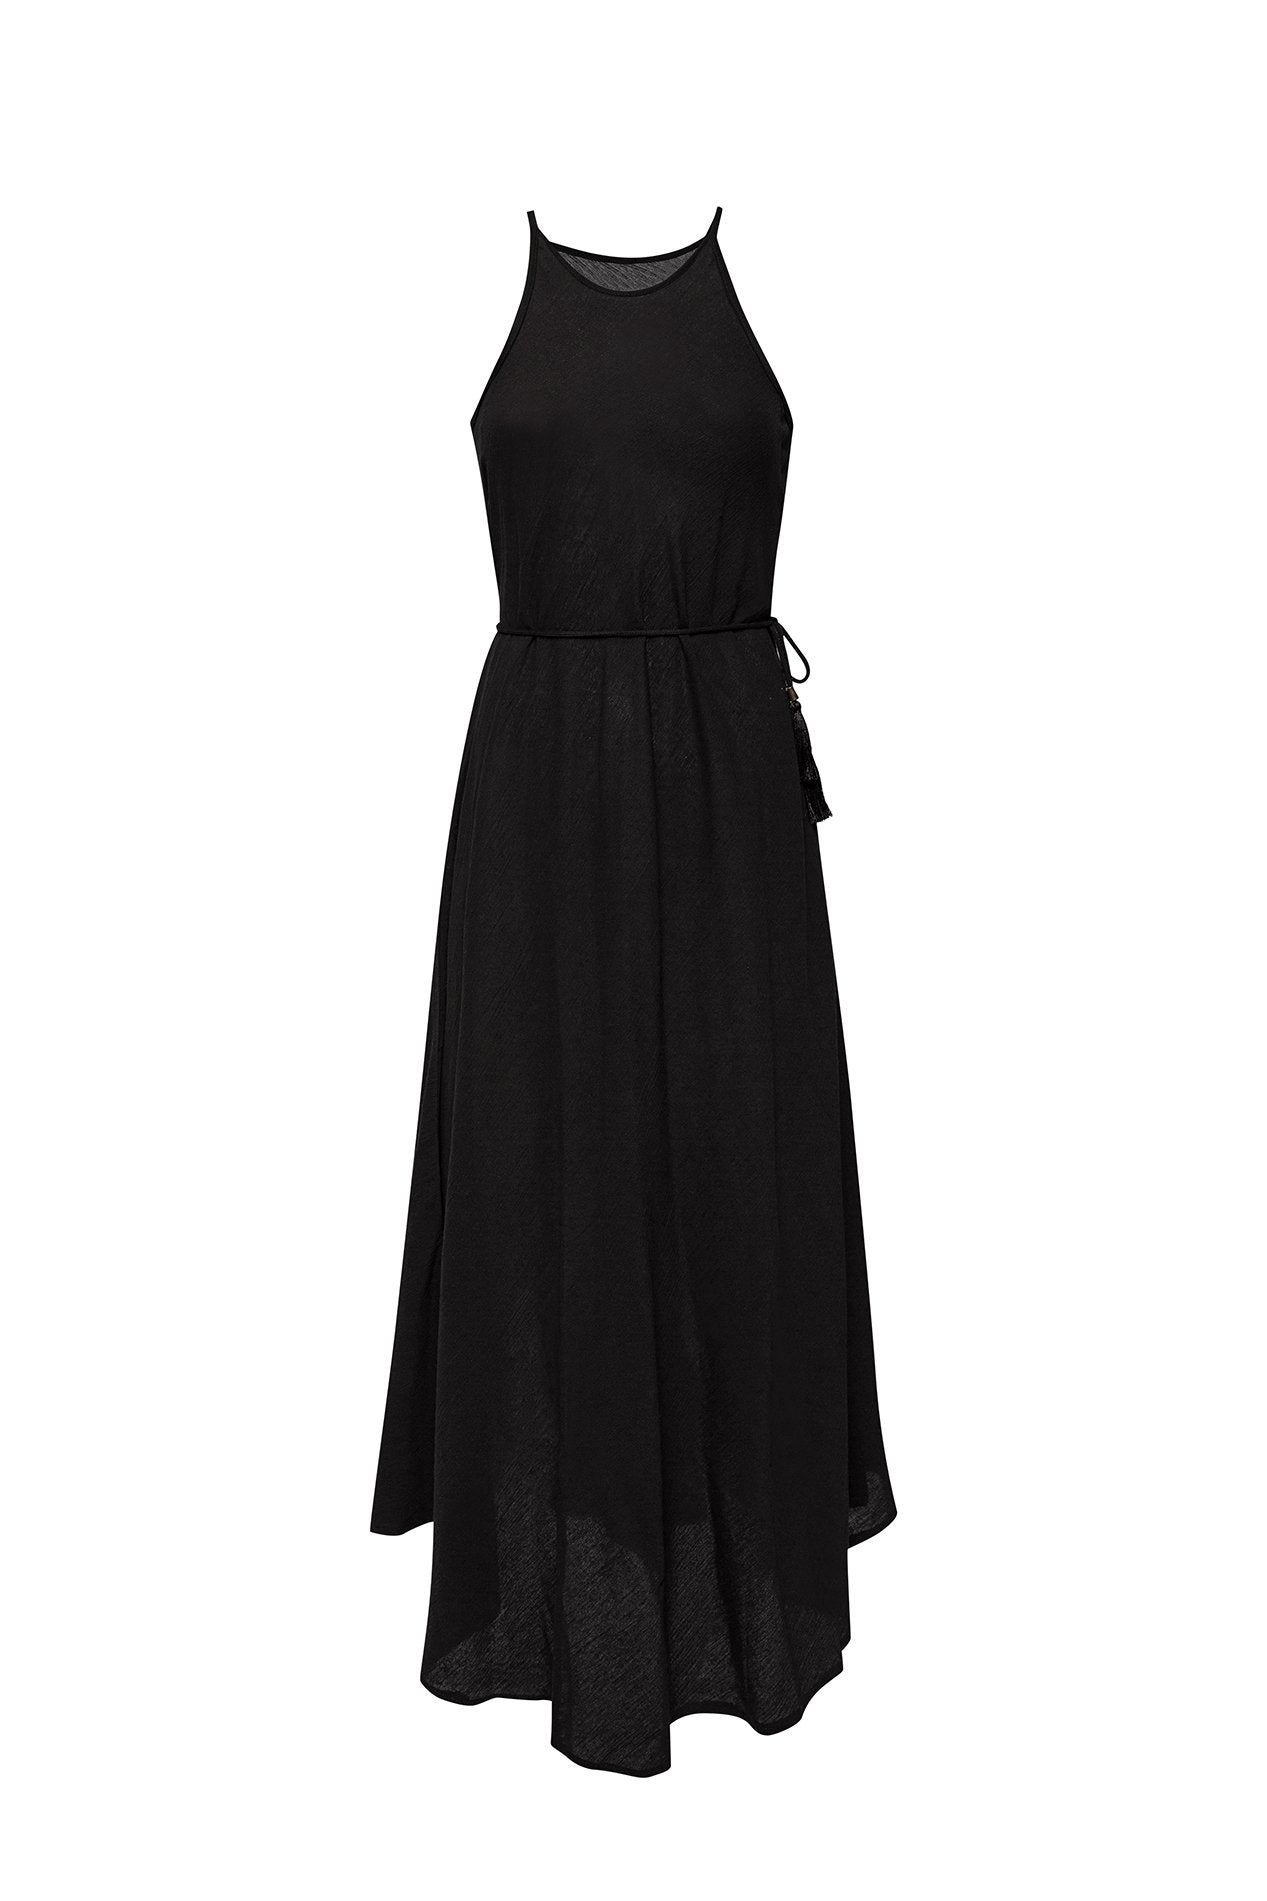 Elegant Black Callie Maxi Dress - The Ultimate Vacation Essential